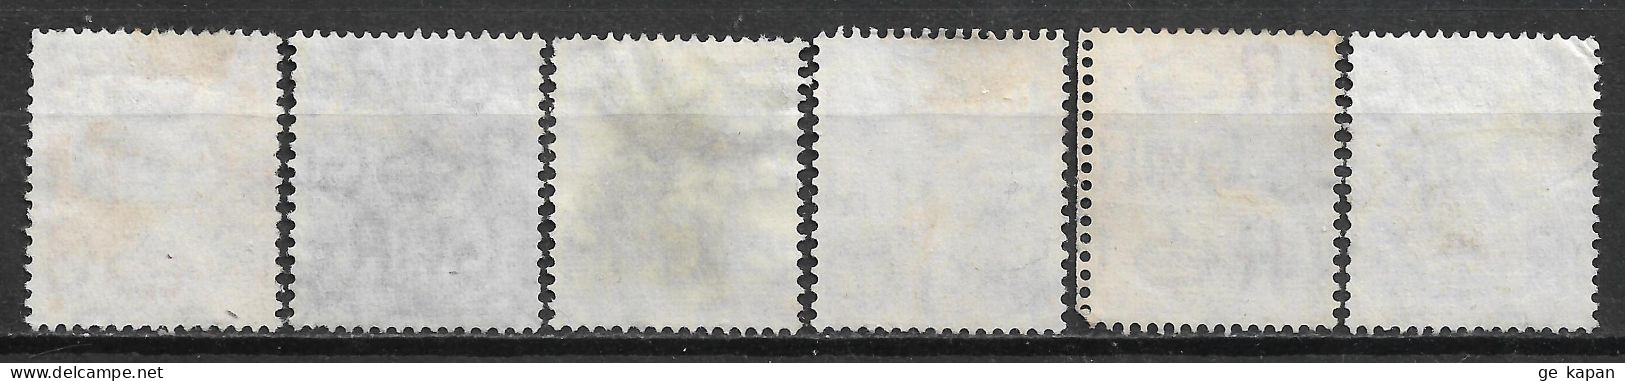 1950-1951 GREAT BRITAIN Complete Set Of 6 Used Stamps (Scott # 280-285) CV $4.00 - Gebraucht